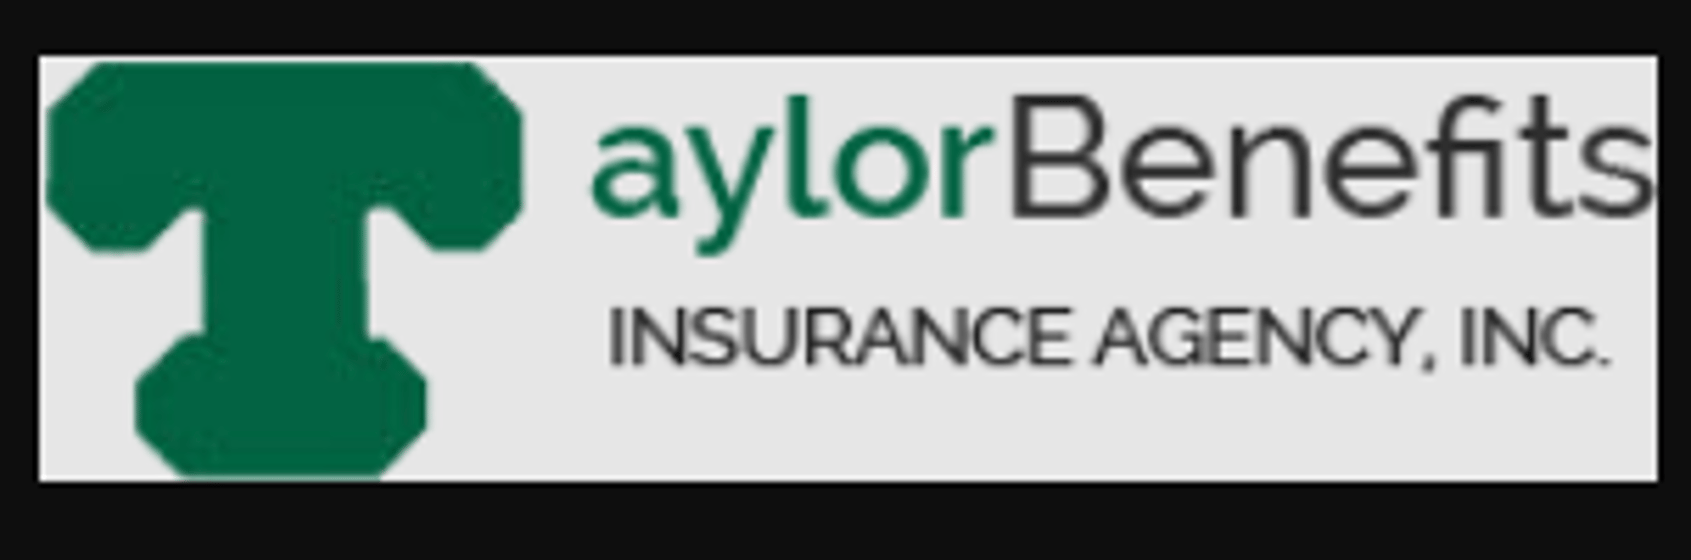 Group Health Employee Benefits Taylor Benefits Insurance  